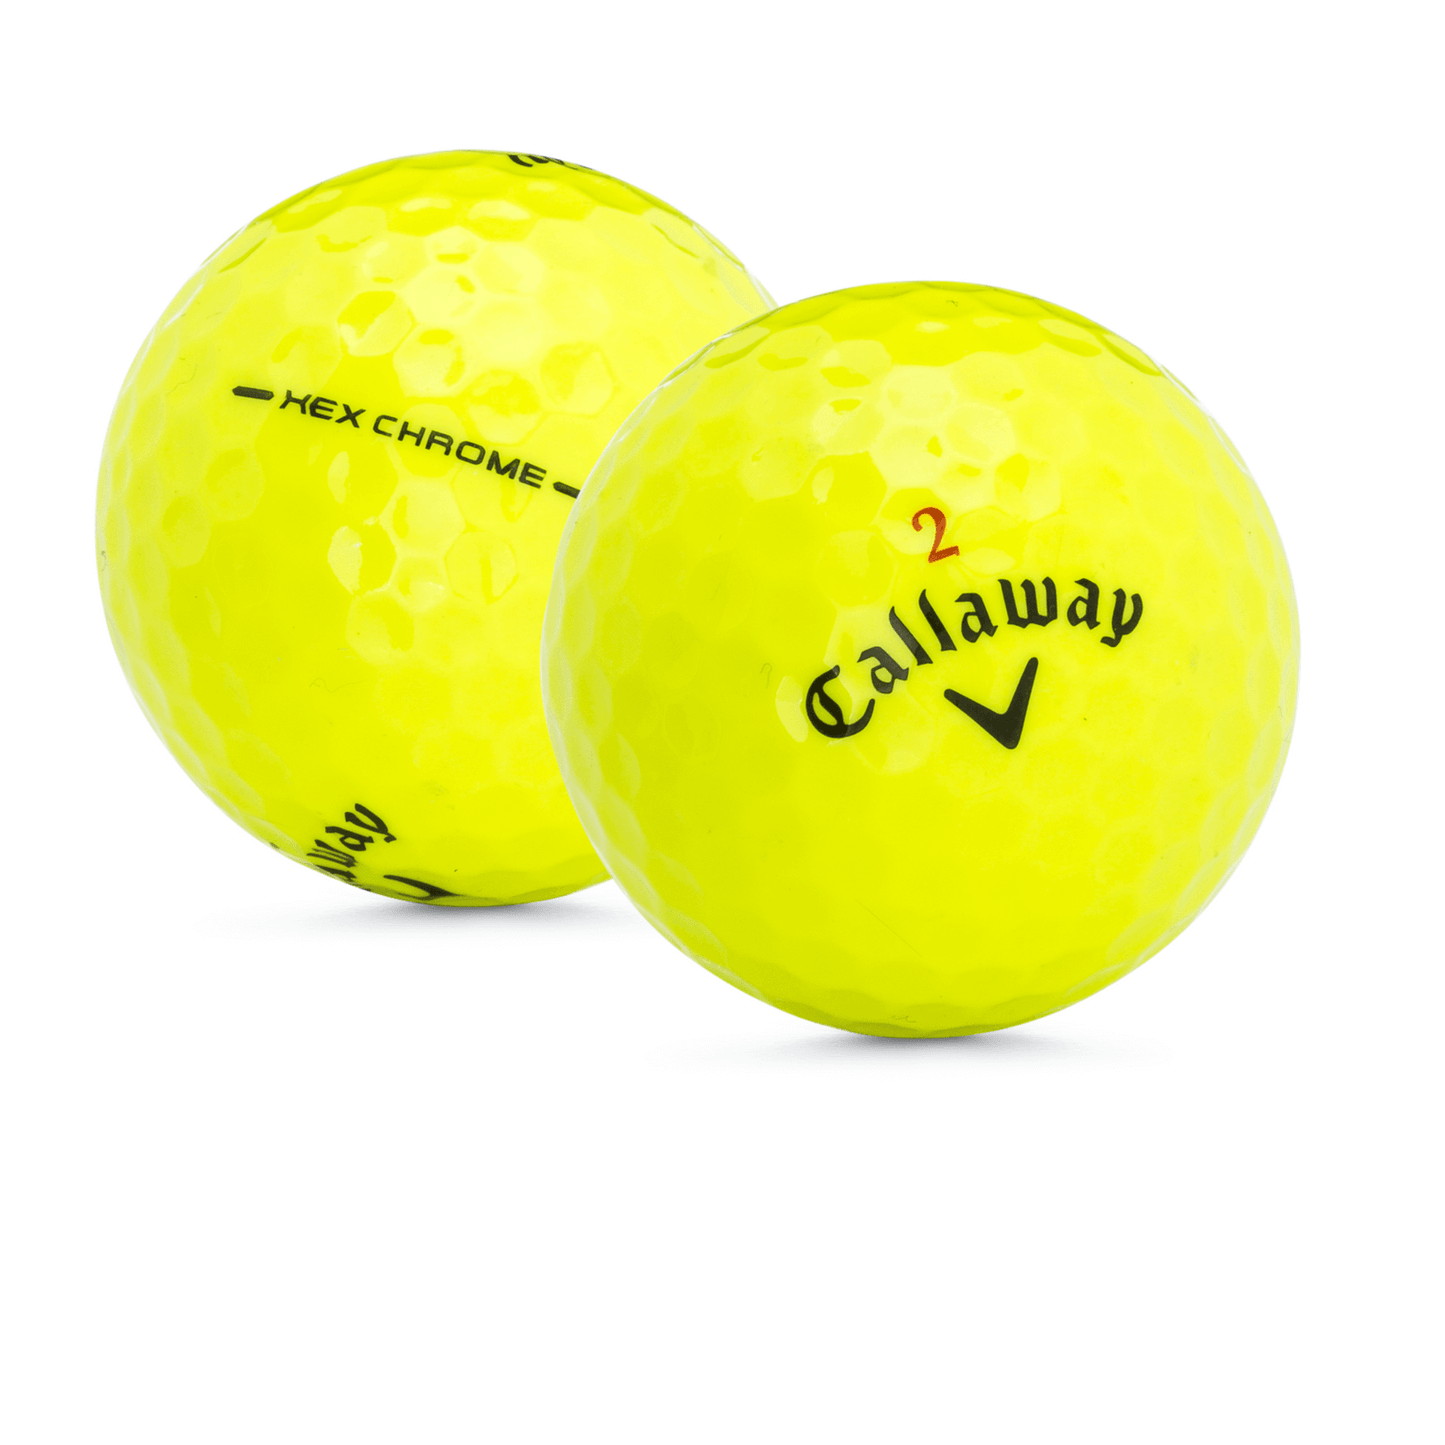 Used Callaway Hexchrome Yellow Golf Balls - 1 Dozen